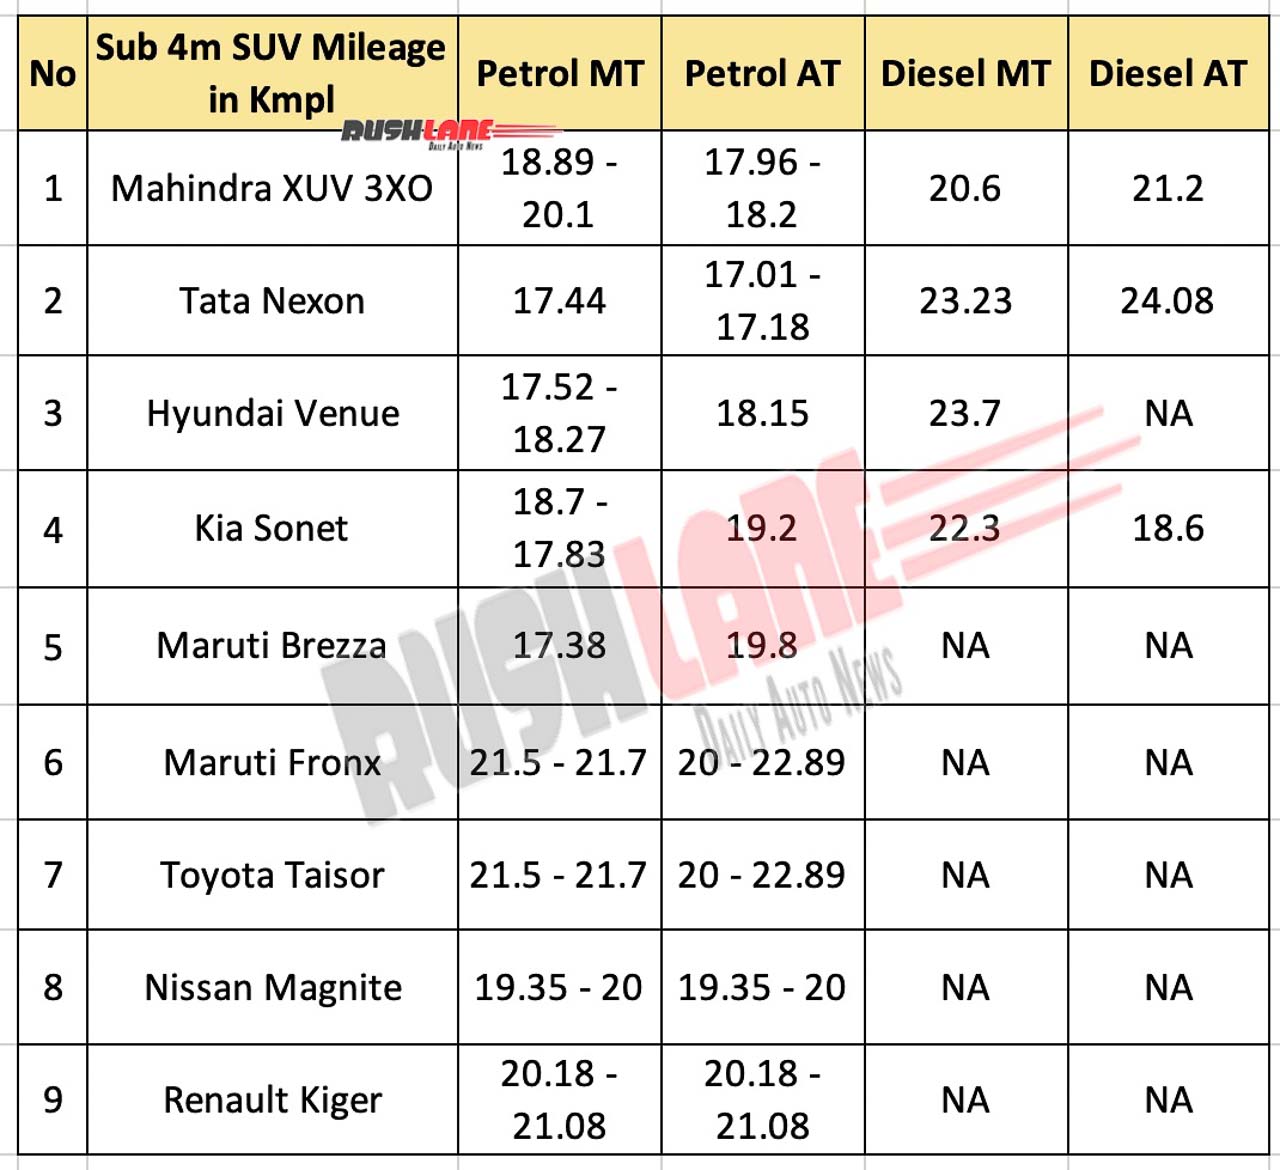 Mahindra XUV3XO vs Rivals - Mileage compared